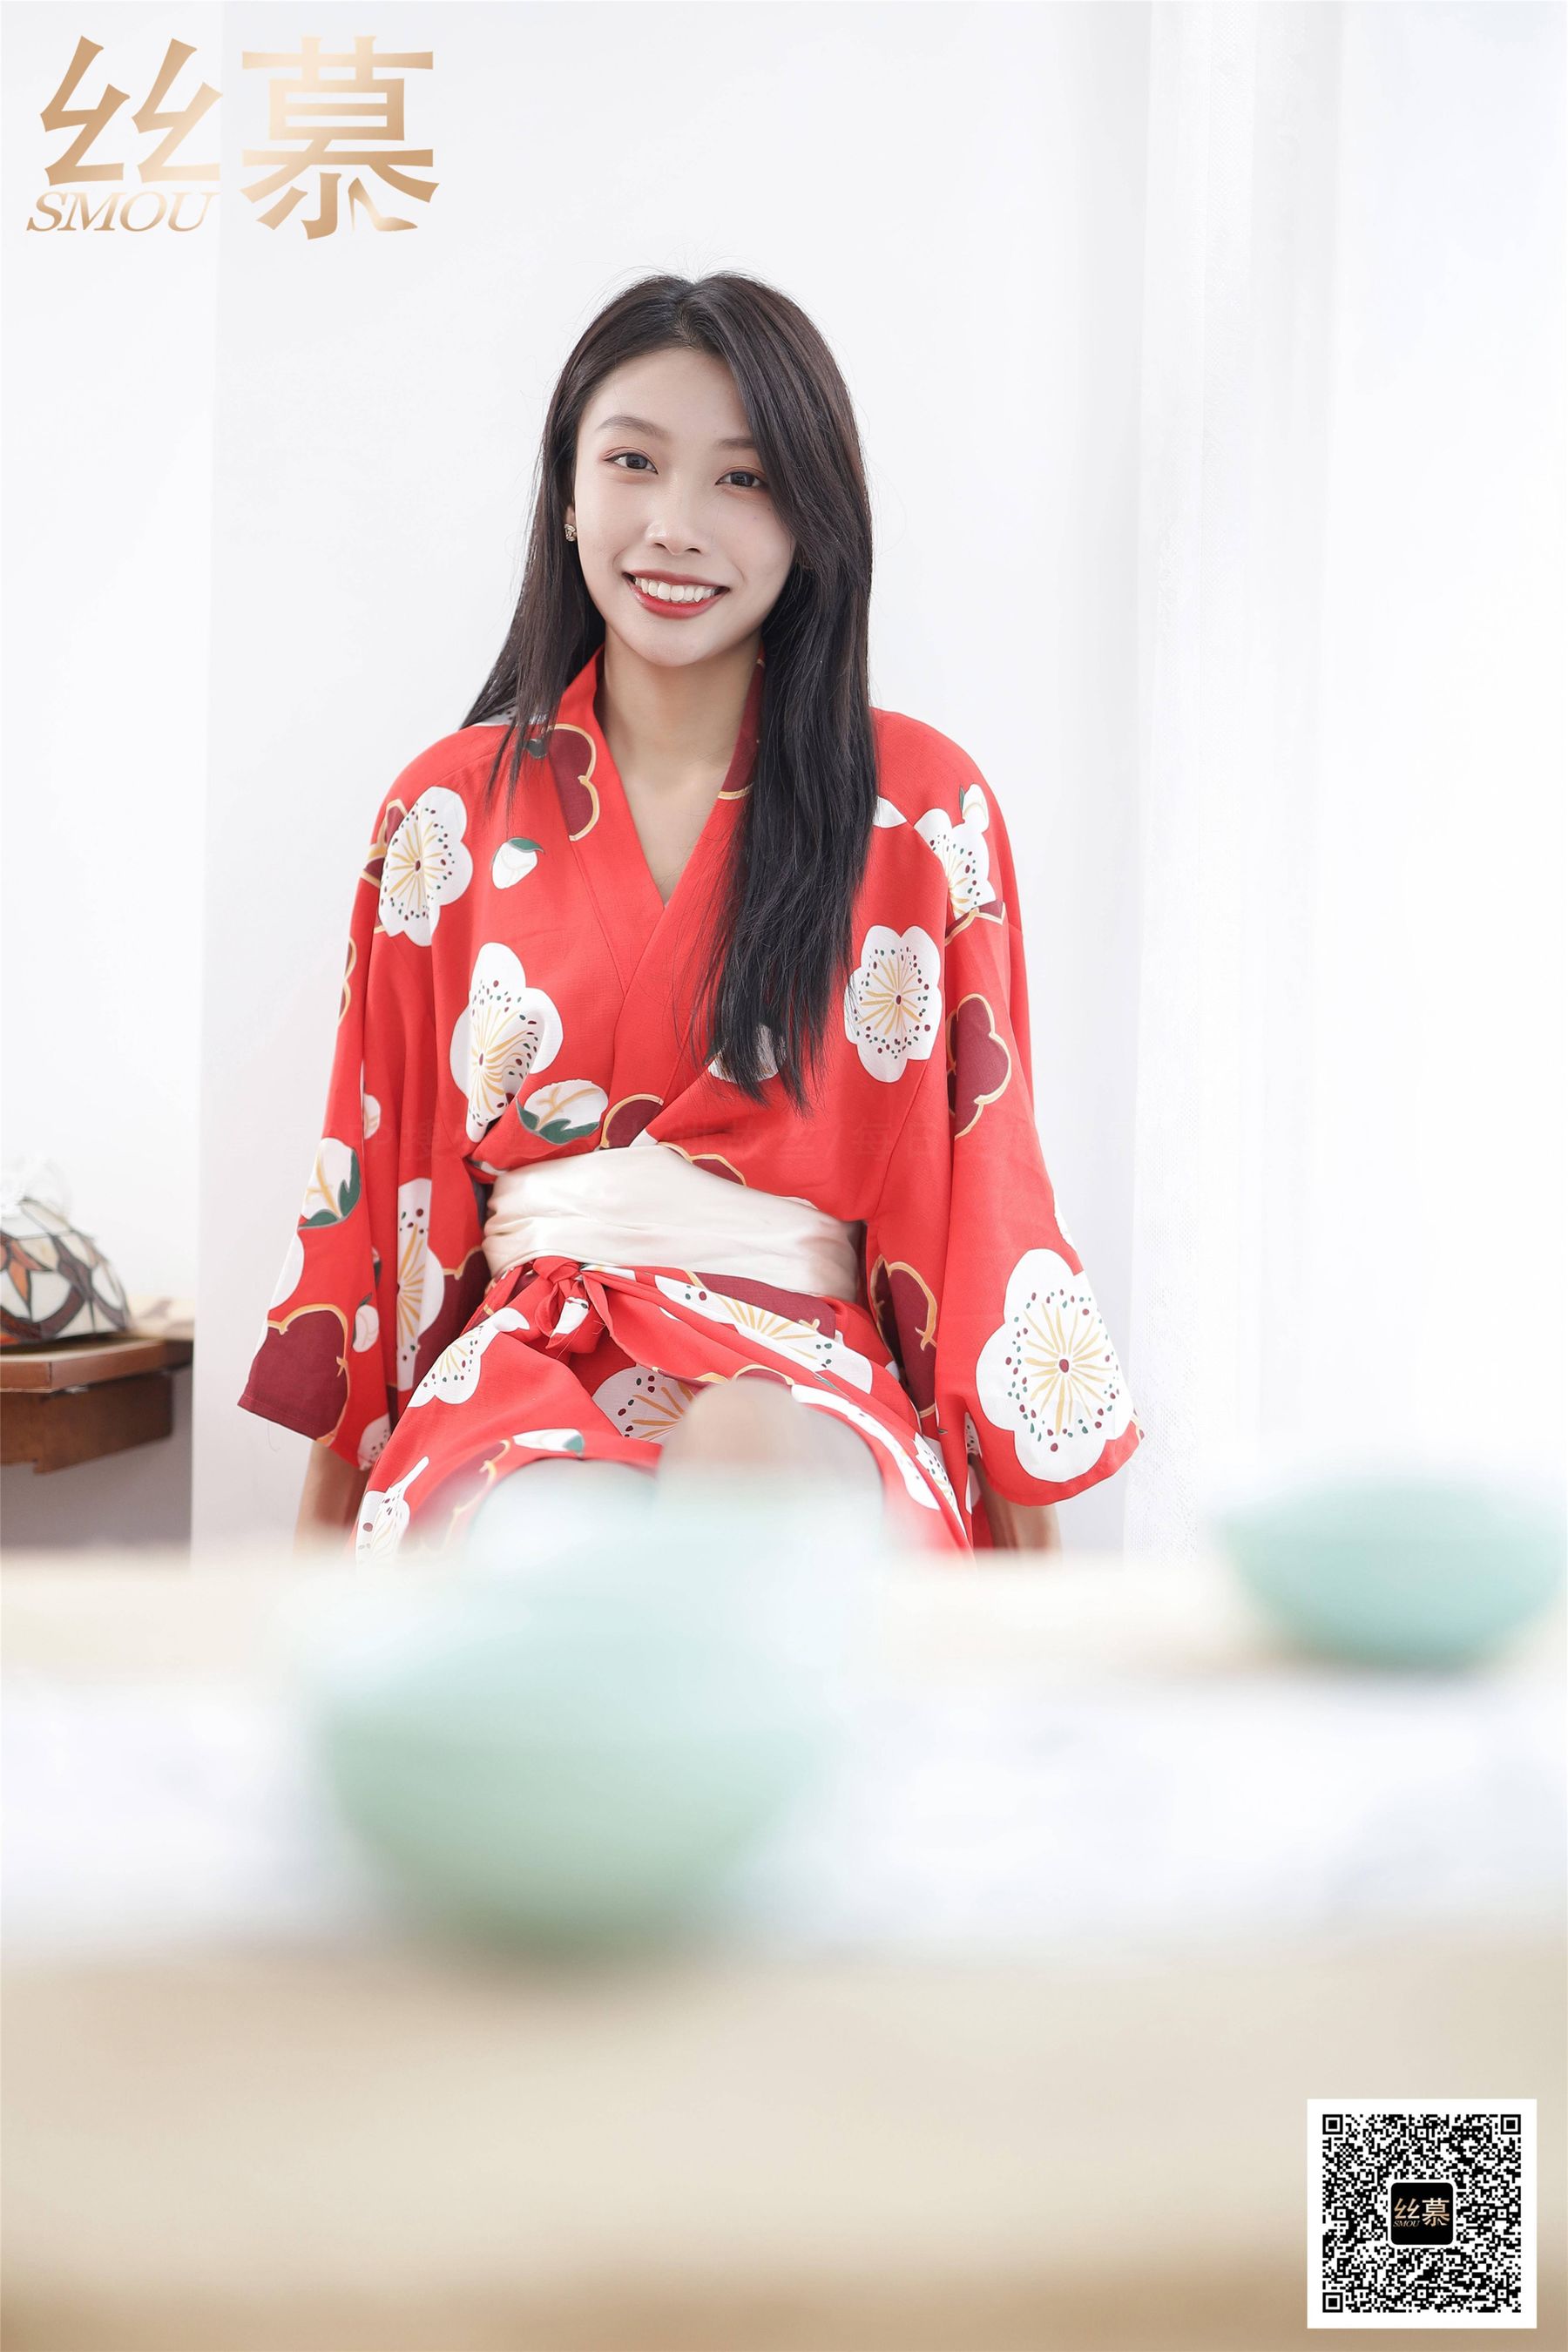 [Smooth] SM381 Everyday One Yuan New Model “Miss Kimono”